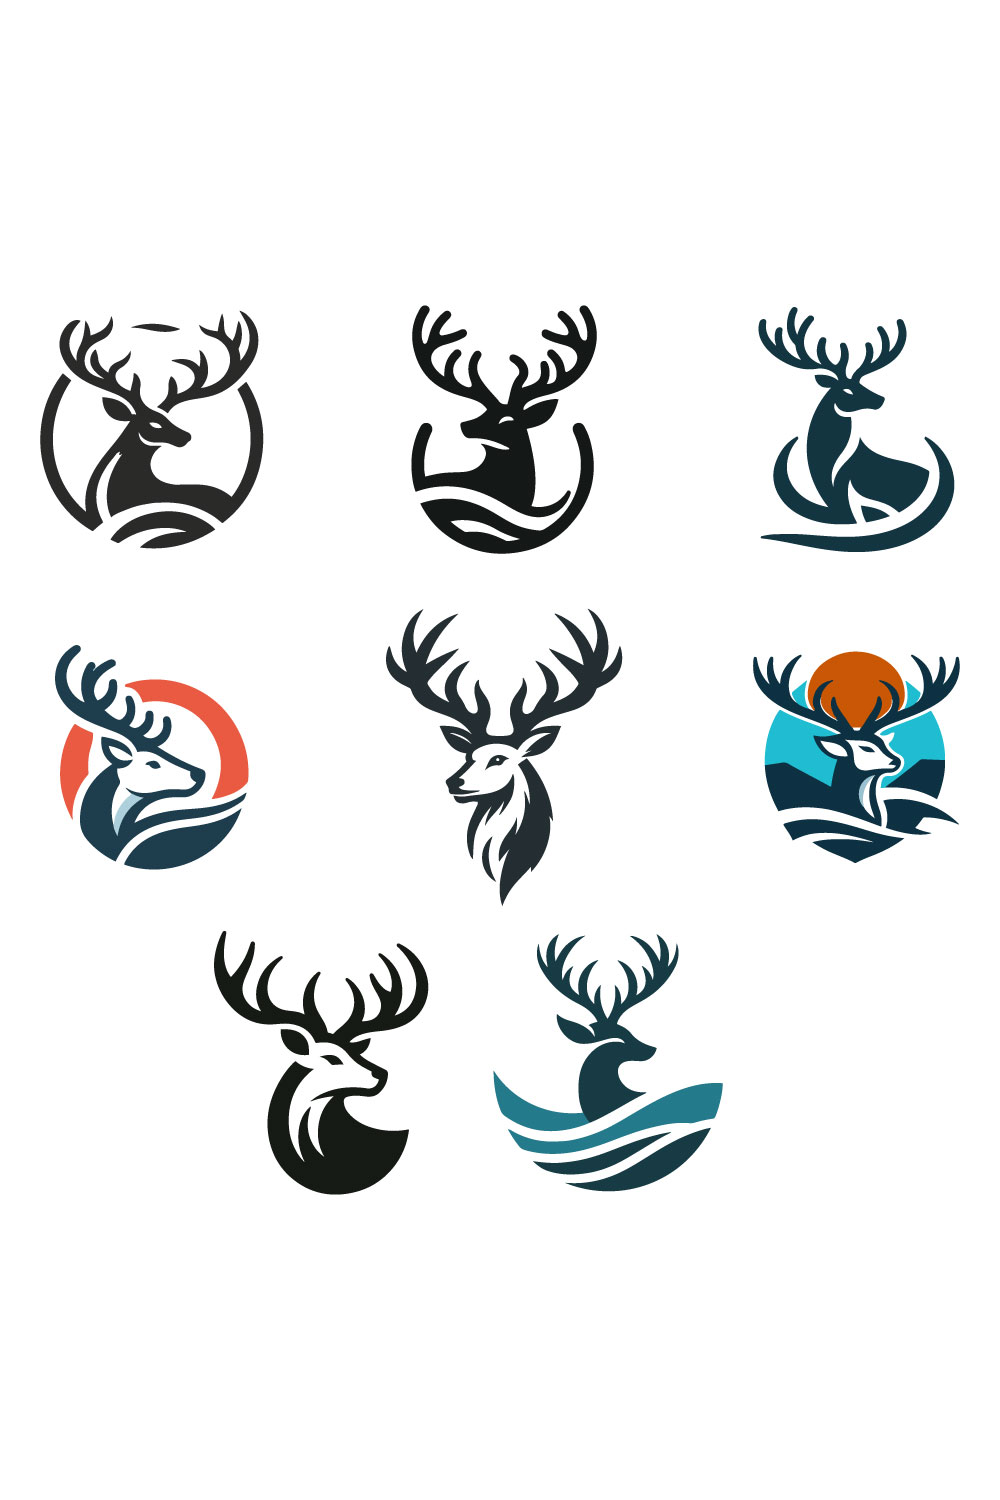 8 Deer Logos Vector Illustration pinterest preview image.